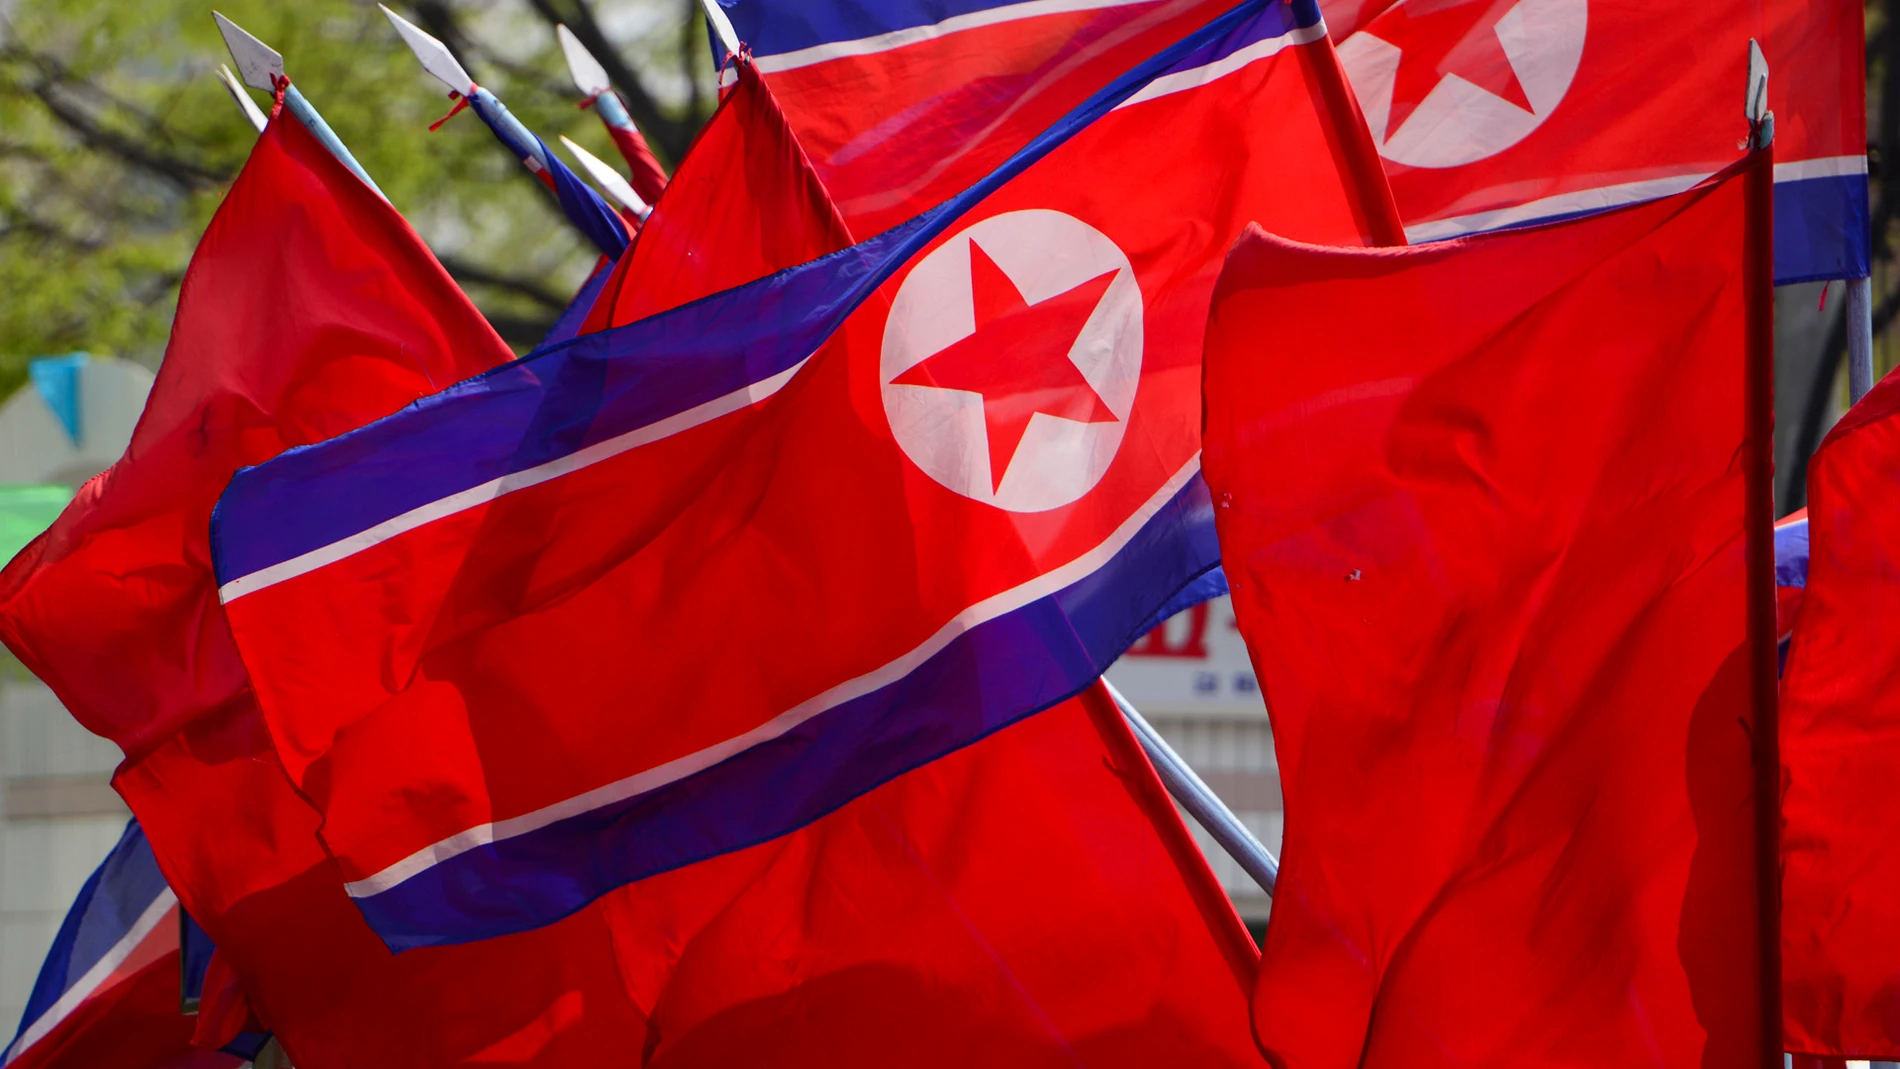 April 13, 2014, Pyongyang, Pyongyang, Democratic Peoples Republic of Korea: North Korean flags fly in the wind in downtown Pyongyang on April 13, 2014. (Foto de ARCHIVO) 13/04/2014